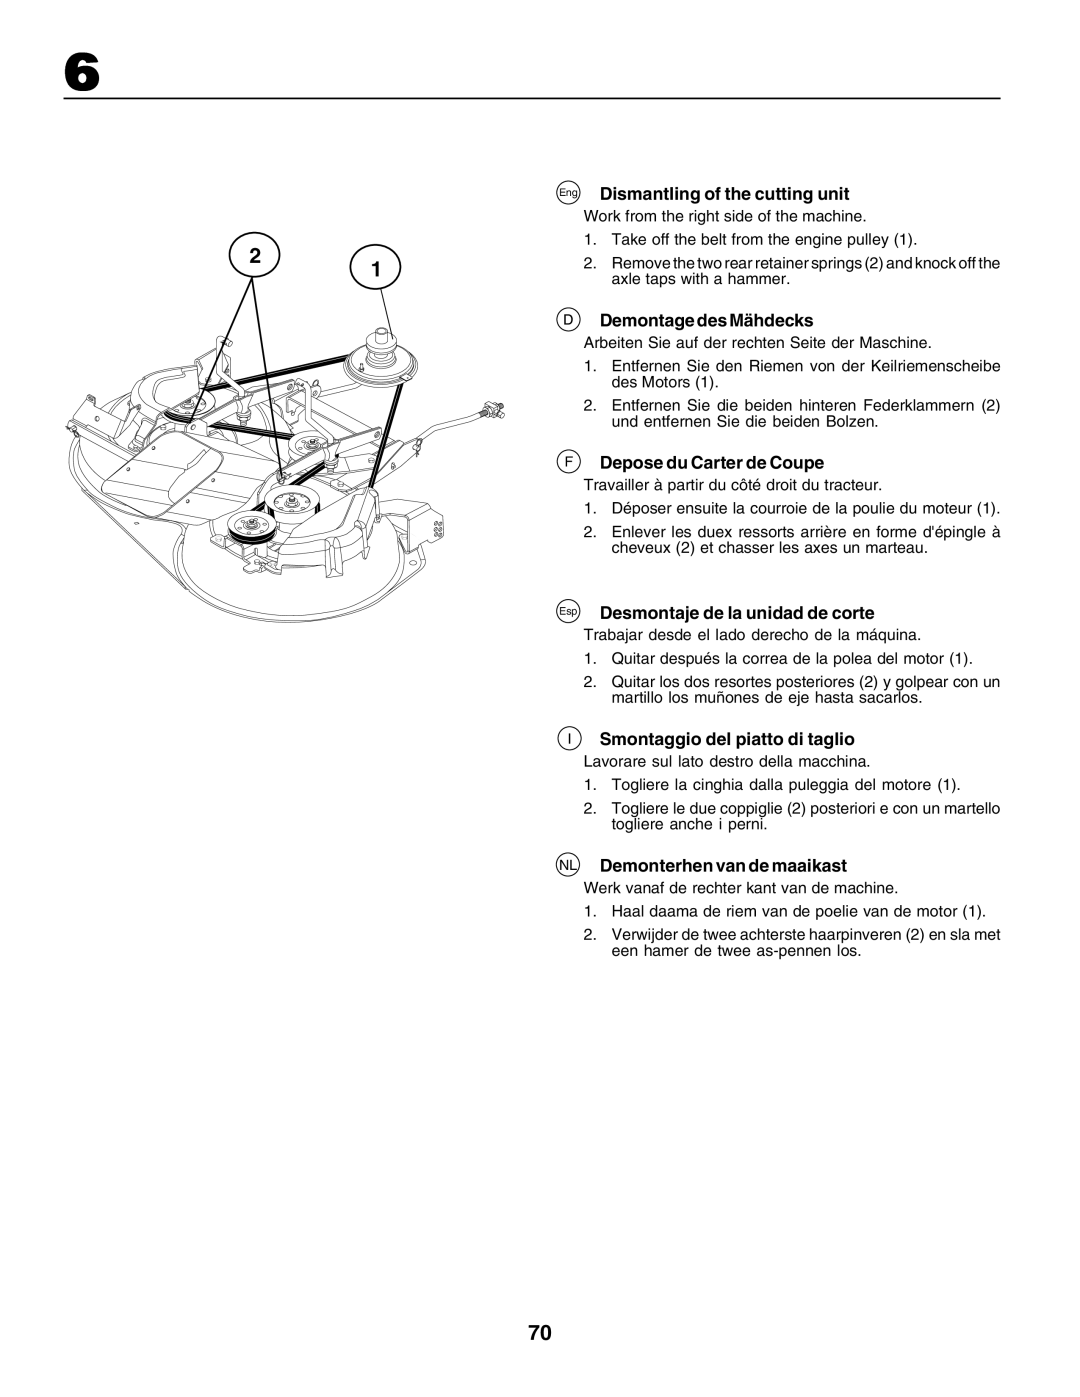 Husqvarna CT135 instruction manual Eng Dismantling of the cutting unit, Demontage des Mähdecks, Depose du Carter de Coupe 